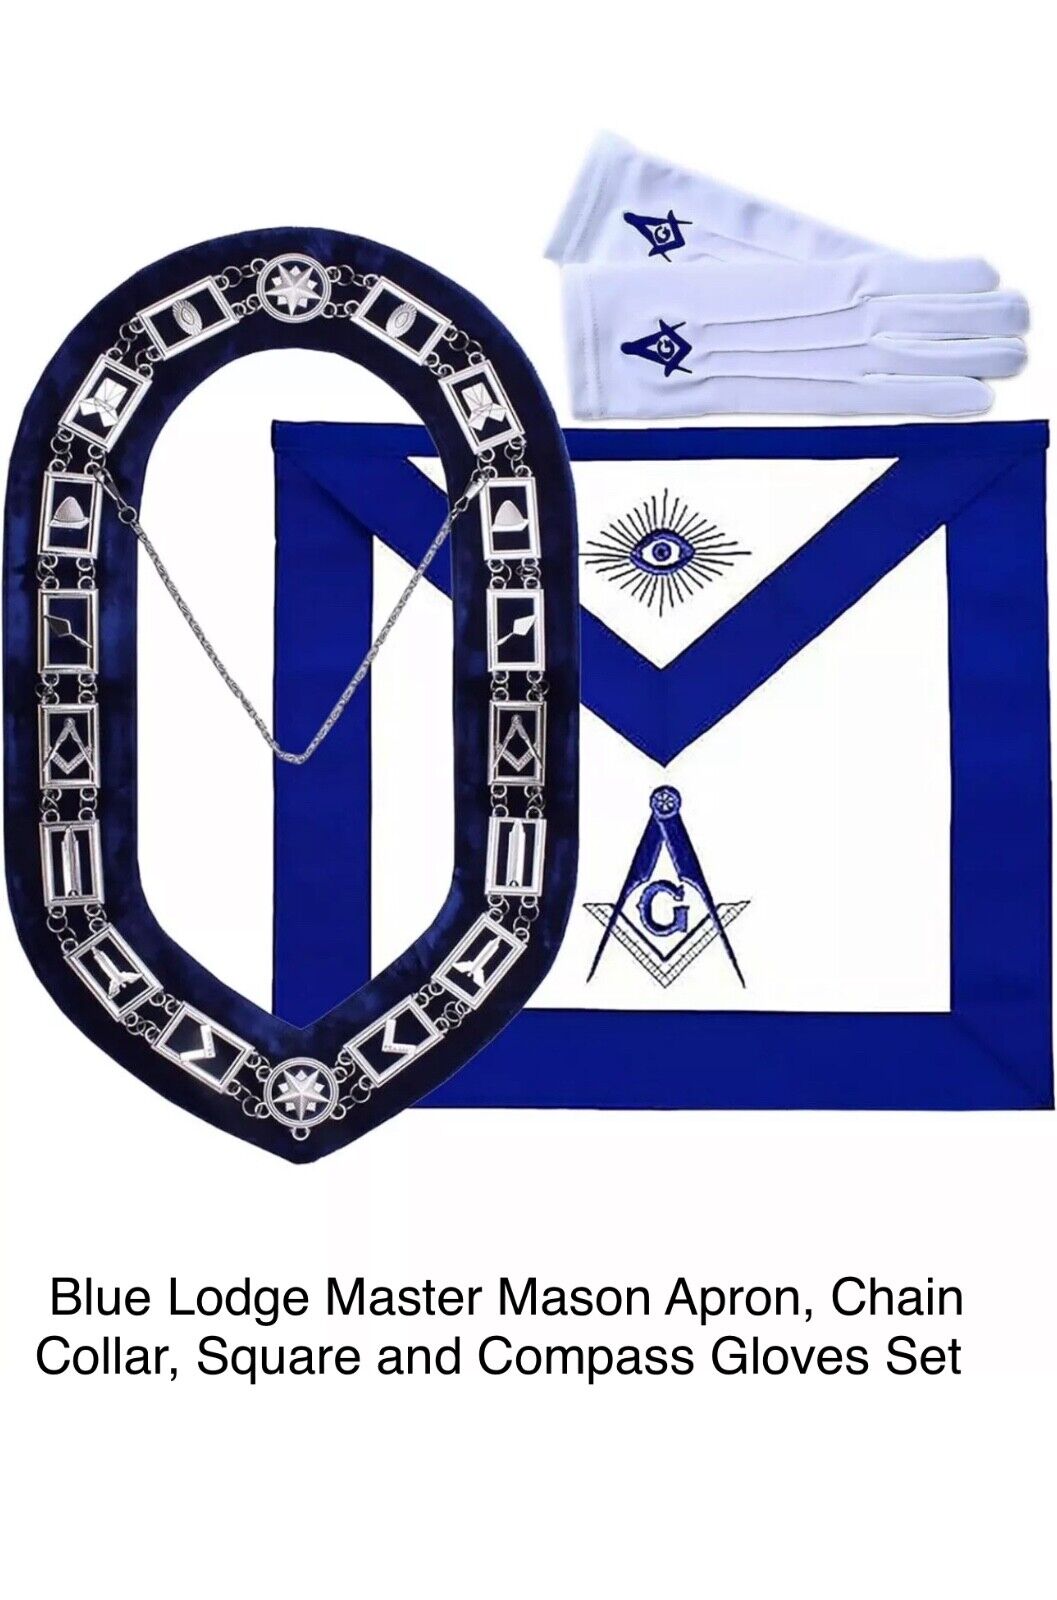 Blue Lodge Master Mason Apron, Chain Collar, Square and Compass Gloves Set